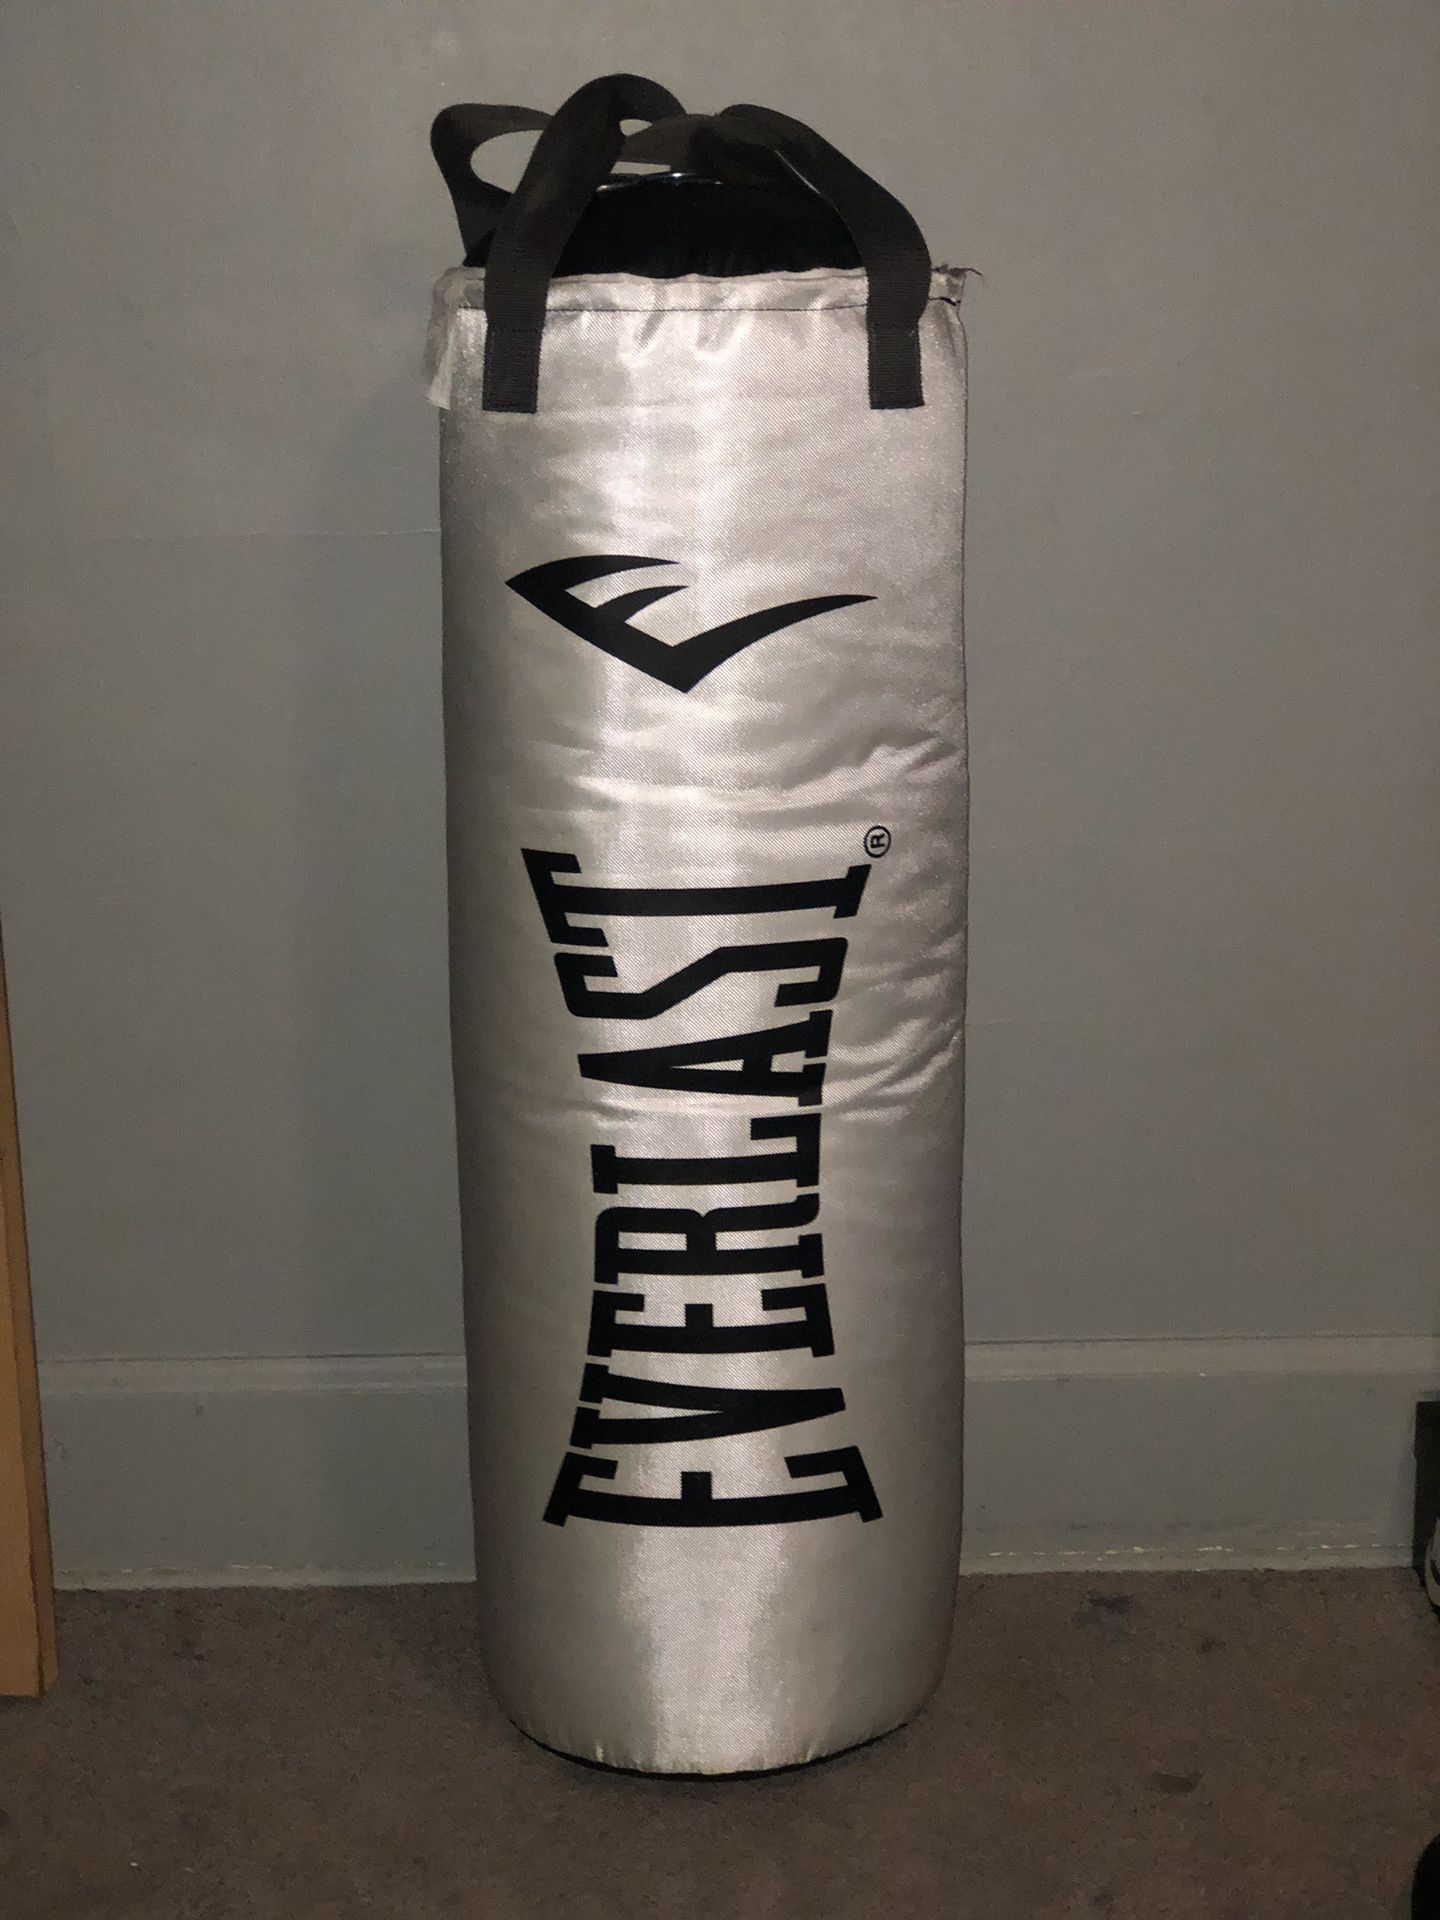 Everlast 80lb punching bag